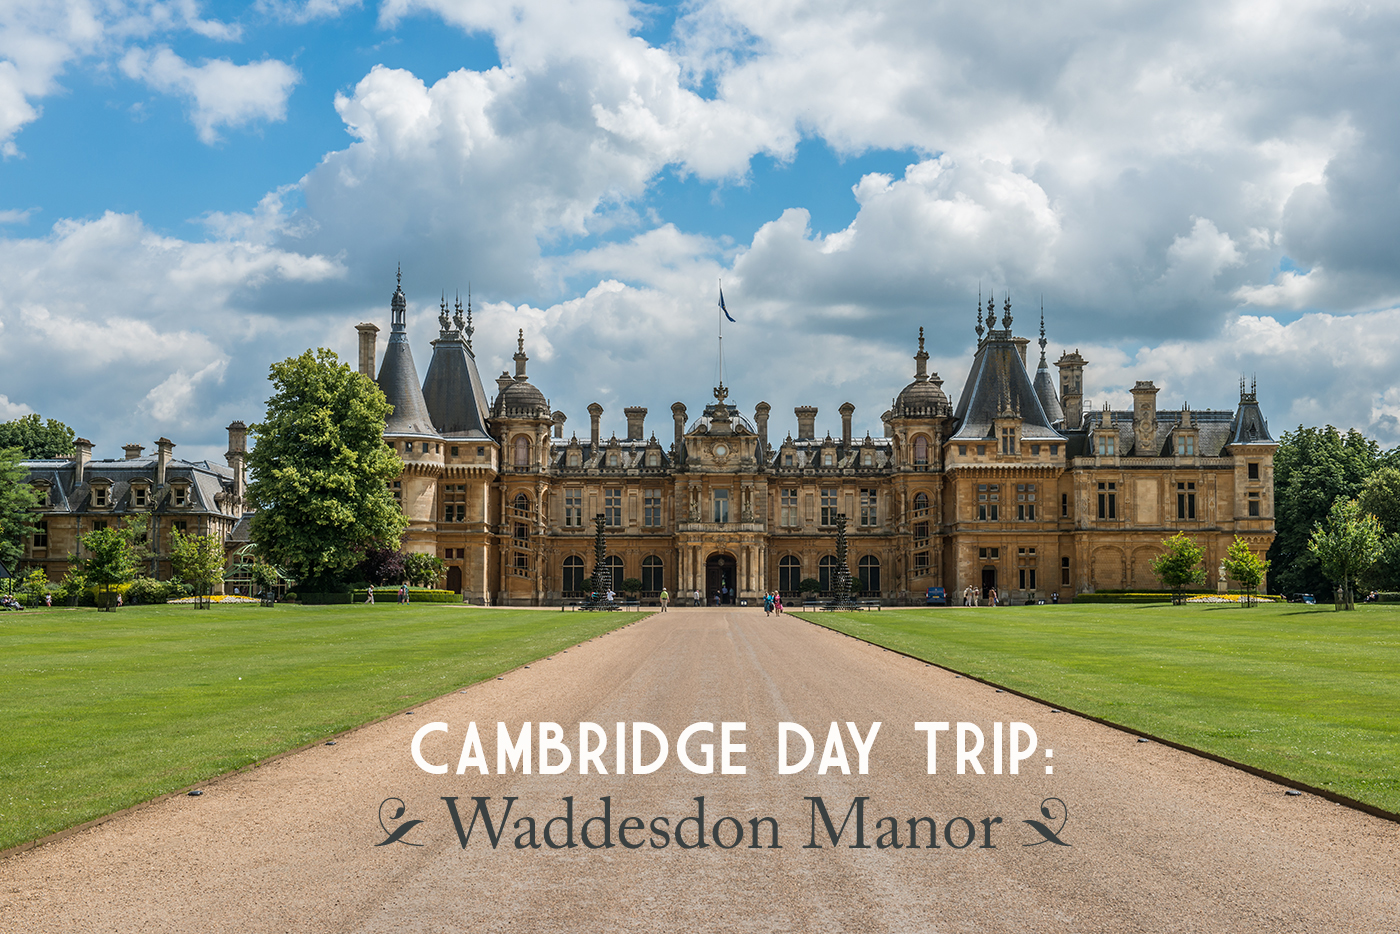 Cambridge England Day Trip to Waddesdon Manor // 180360.com